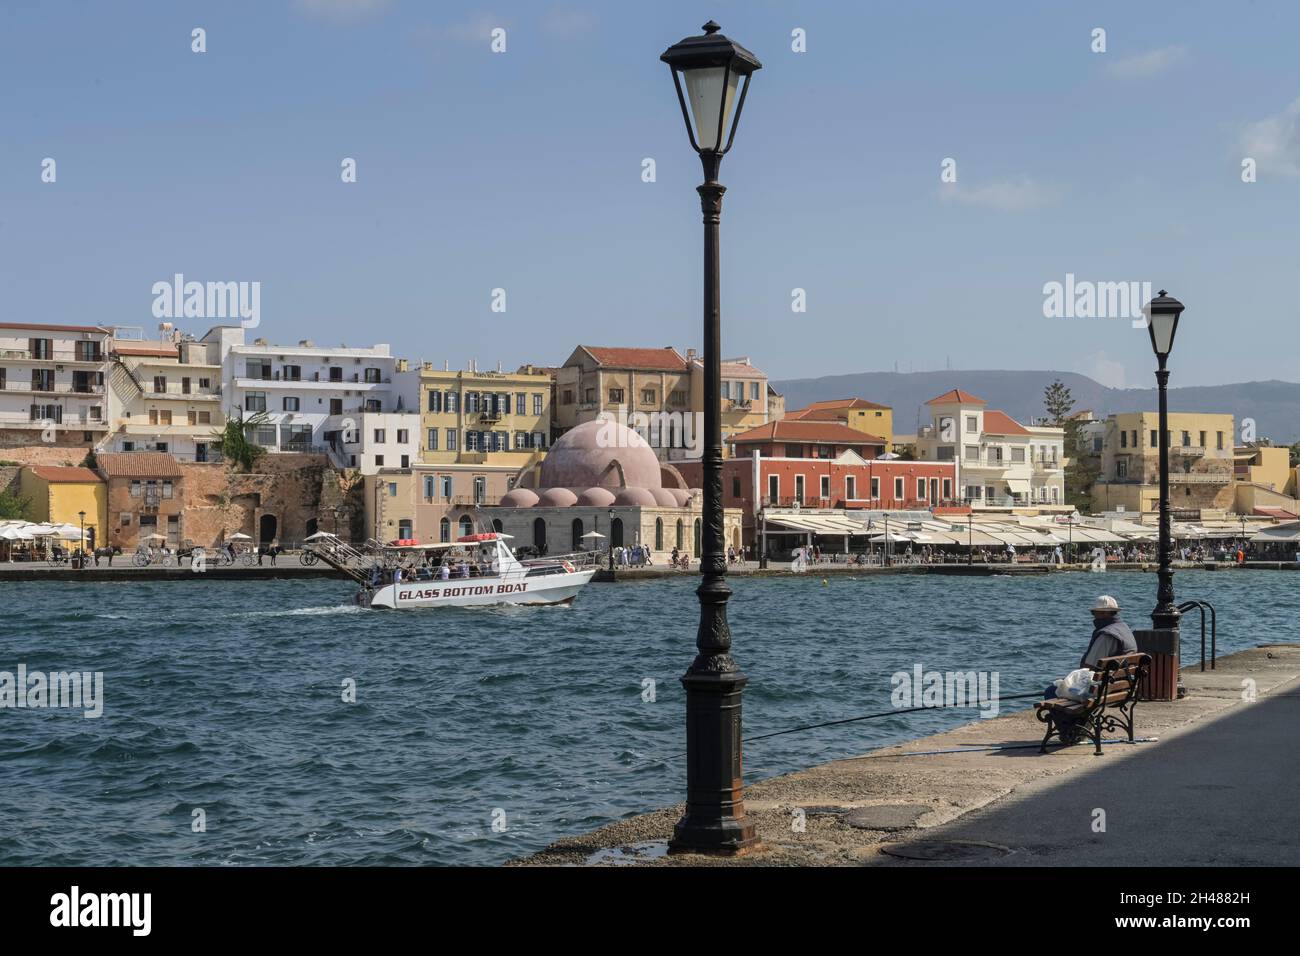 Venezianischer Hafen mit Kioutsouk Hassan Moschee, Chania, Kreta, Griechenland Banque D'Images